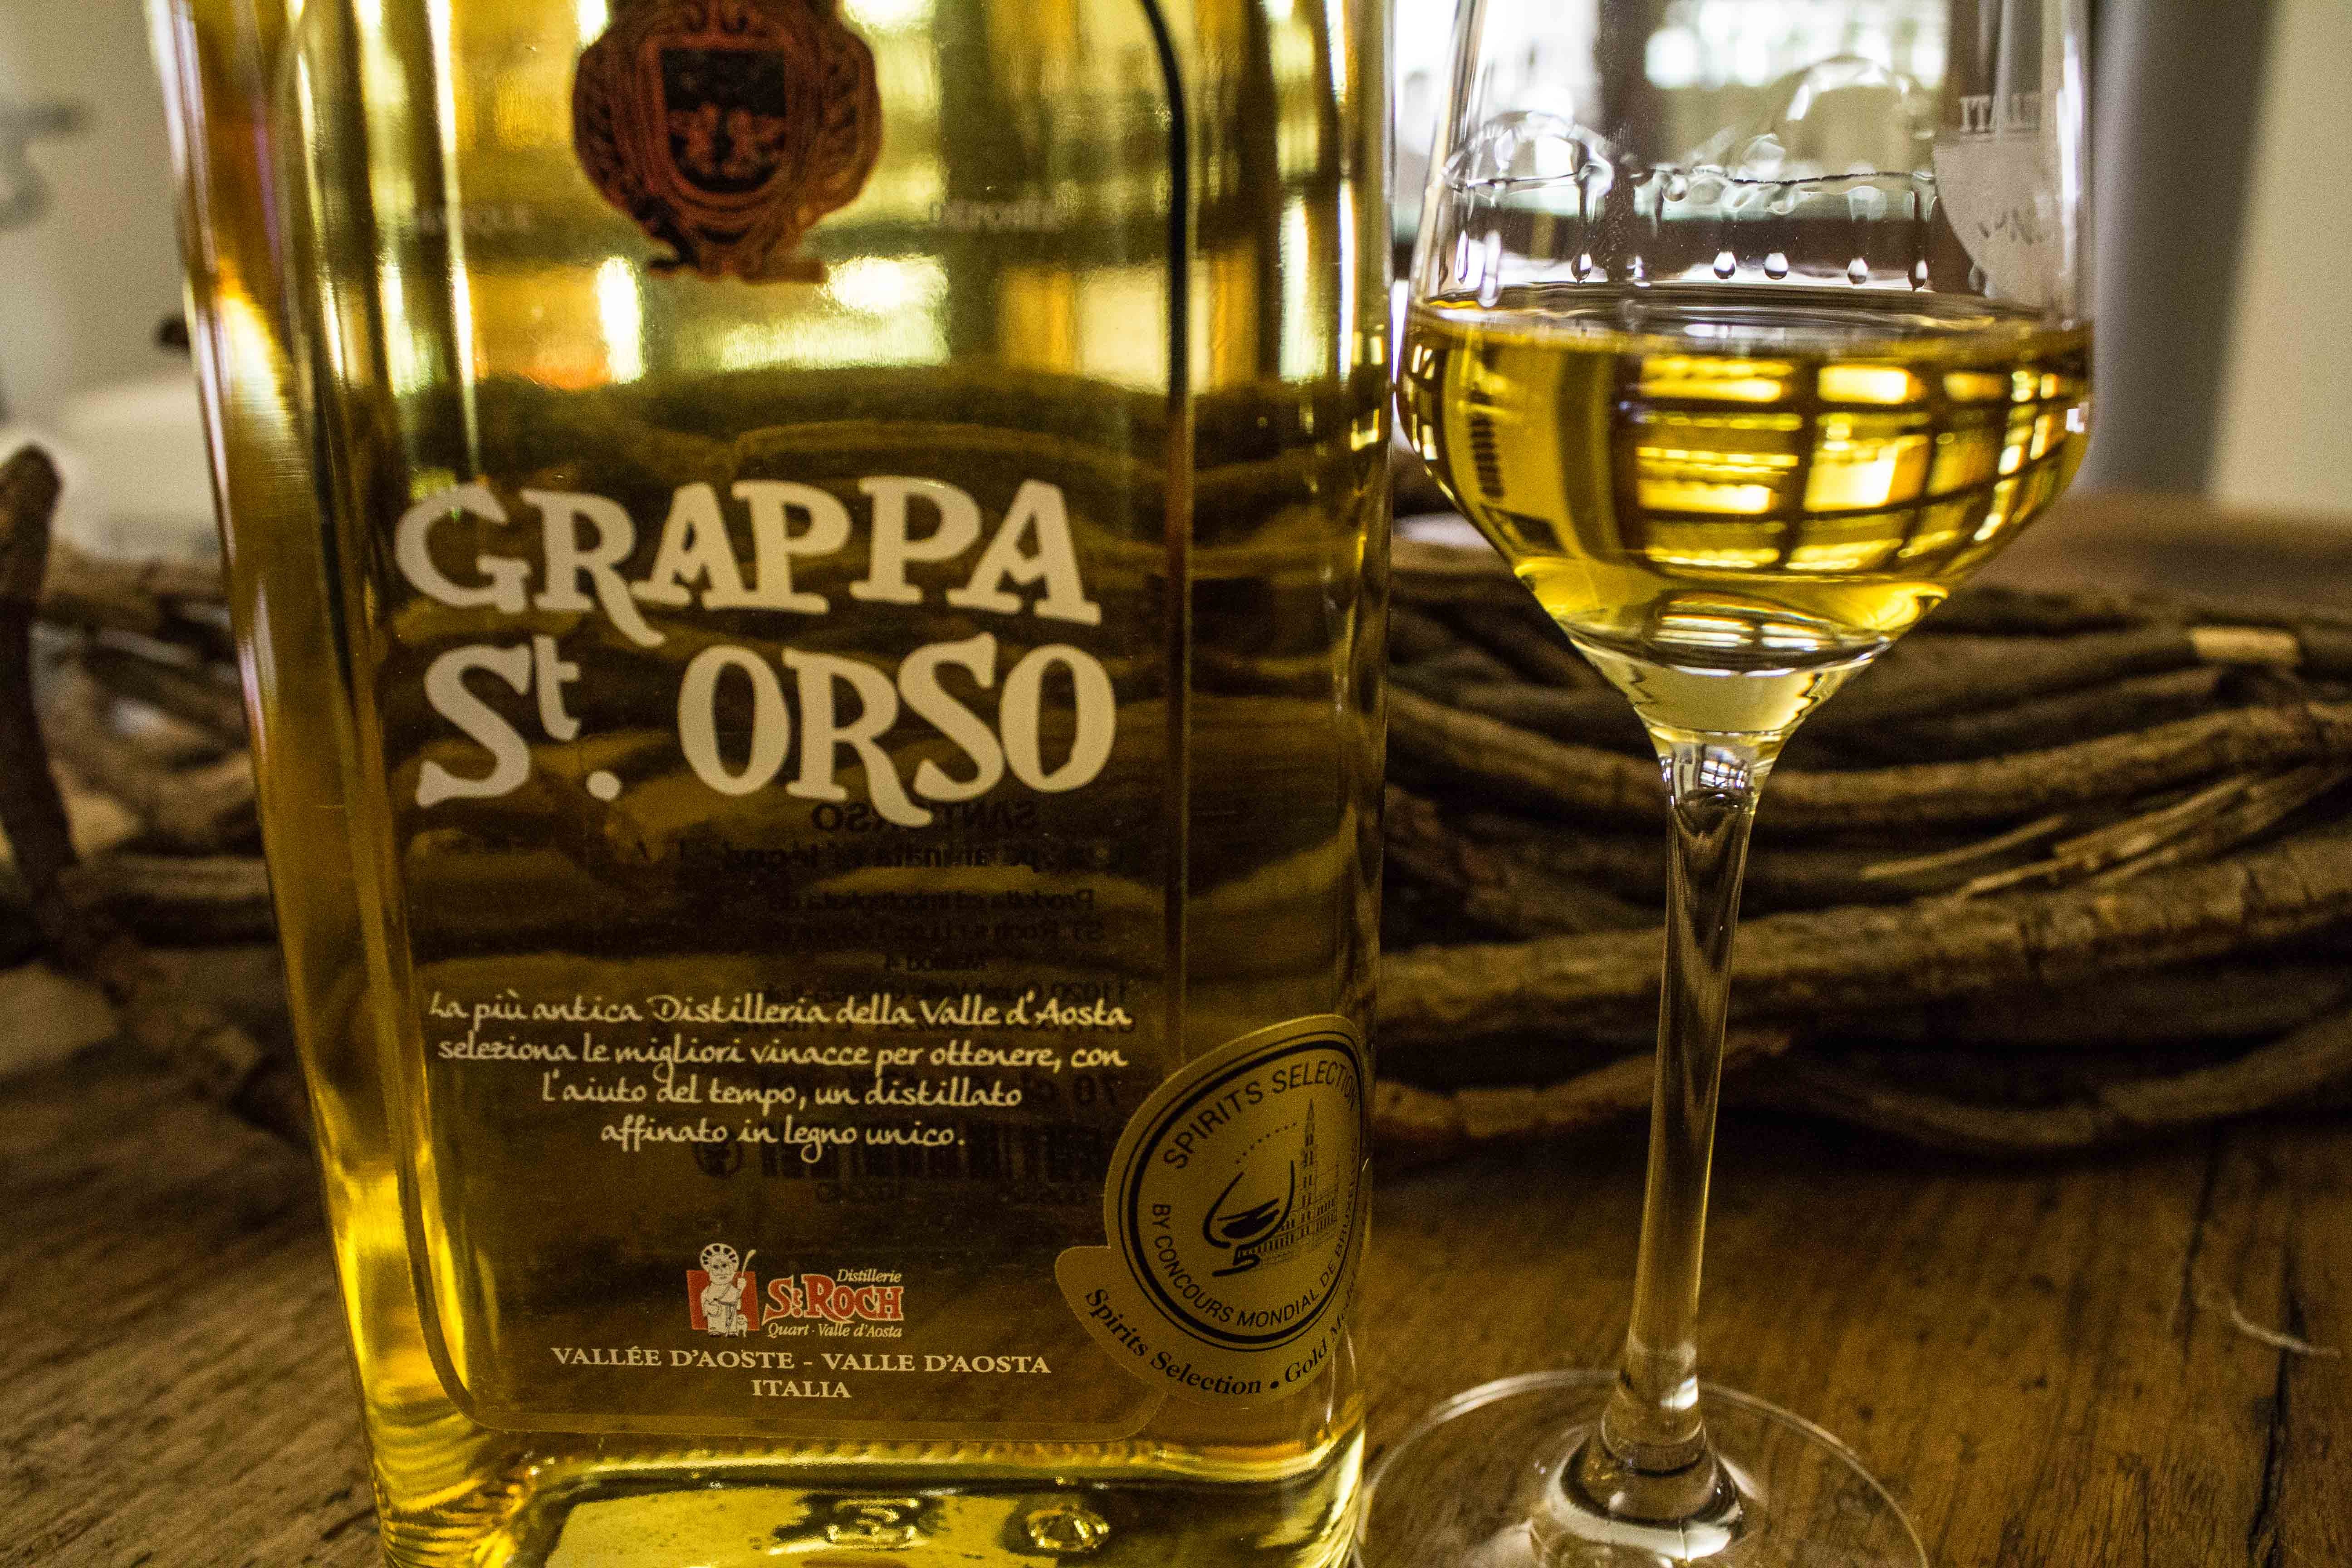 Grappa Sant'Orso - Aged in oak barrels